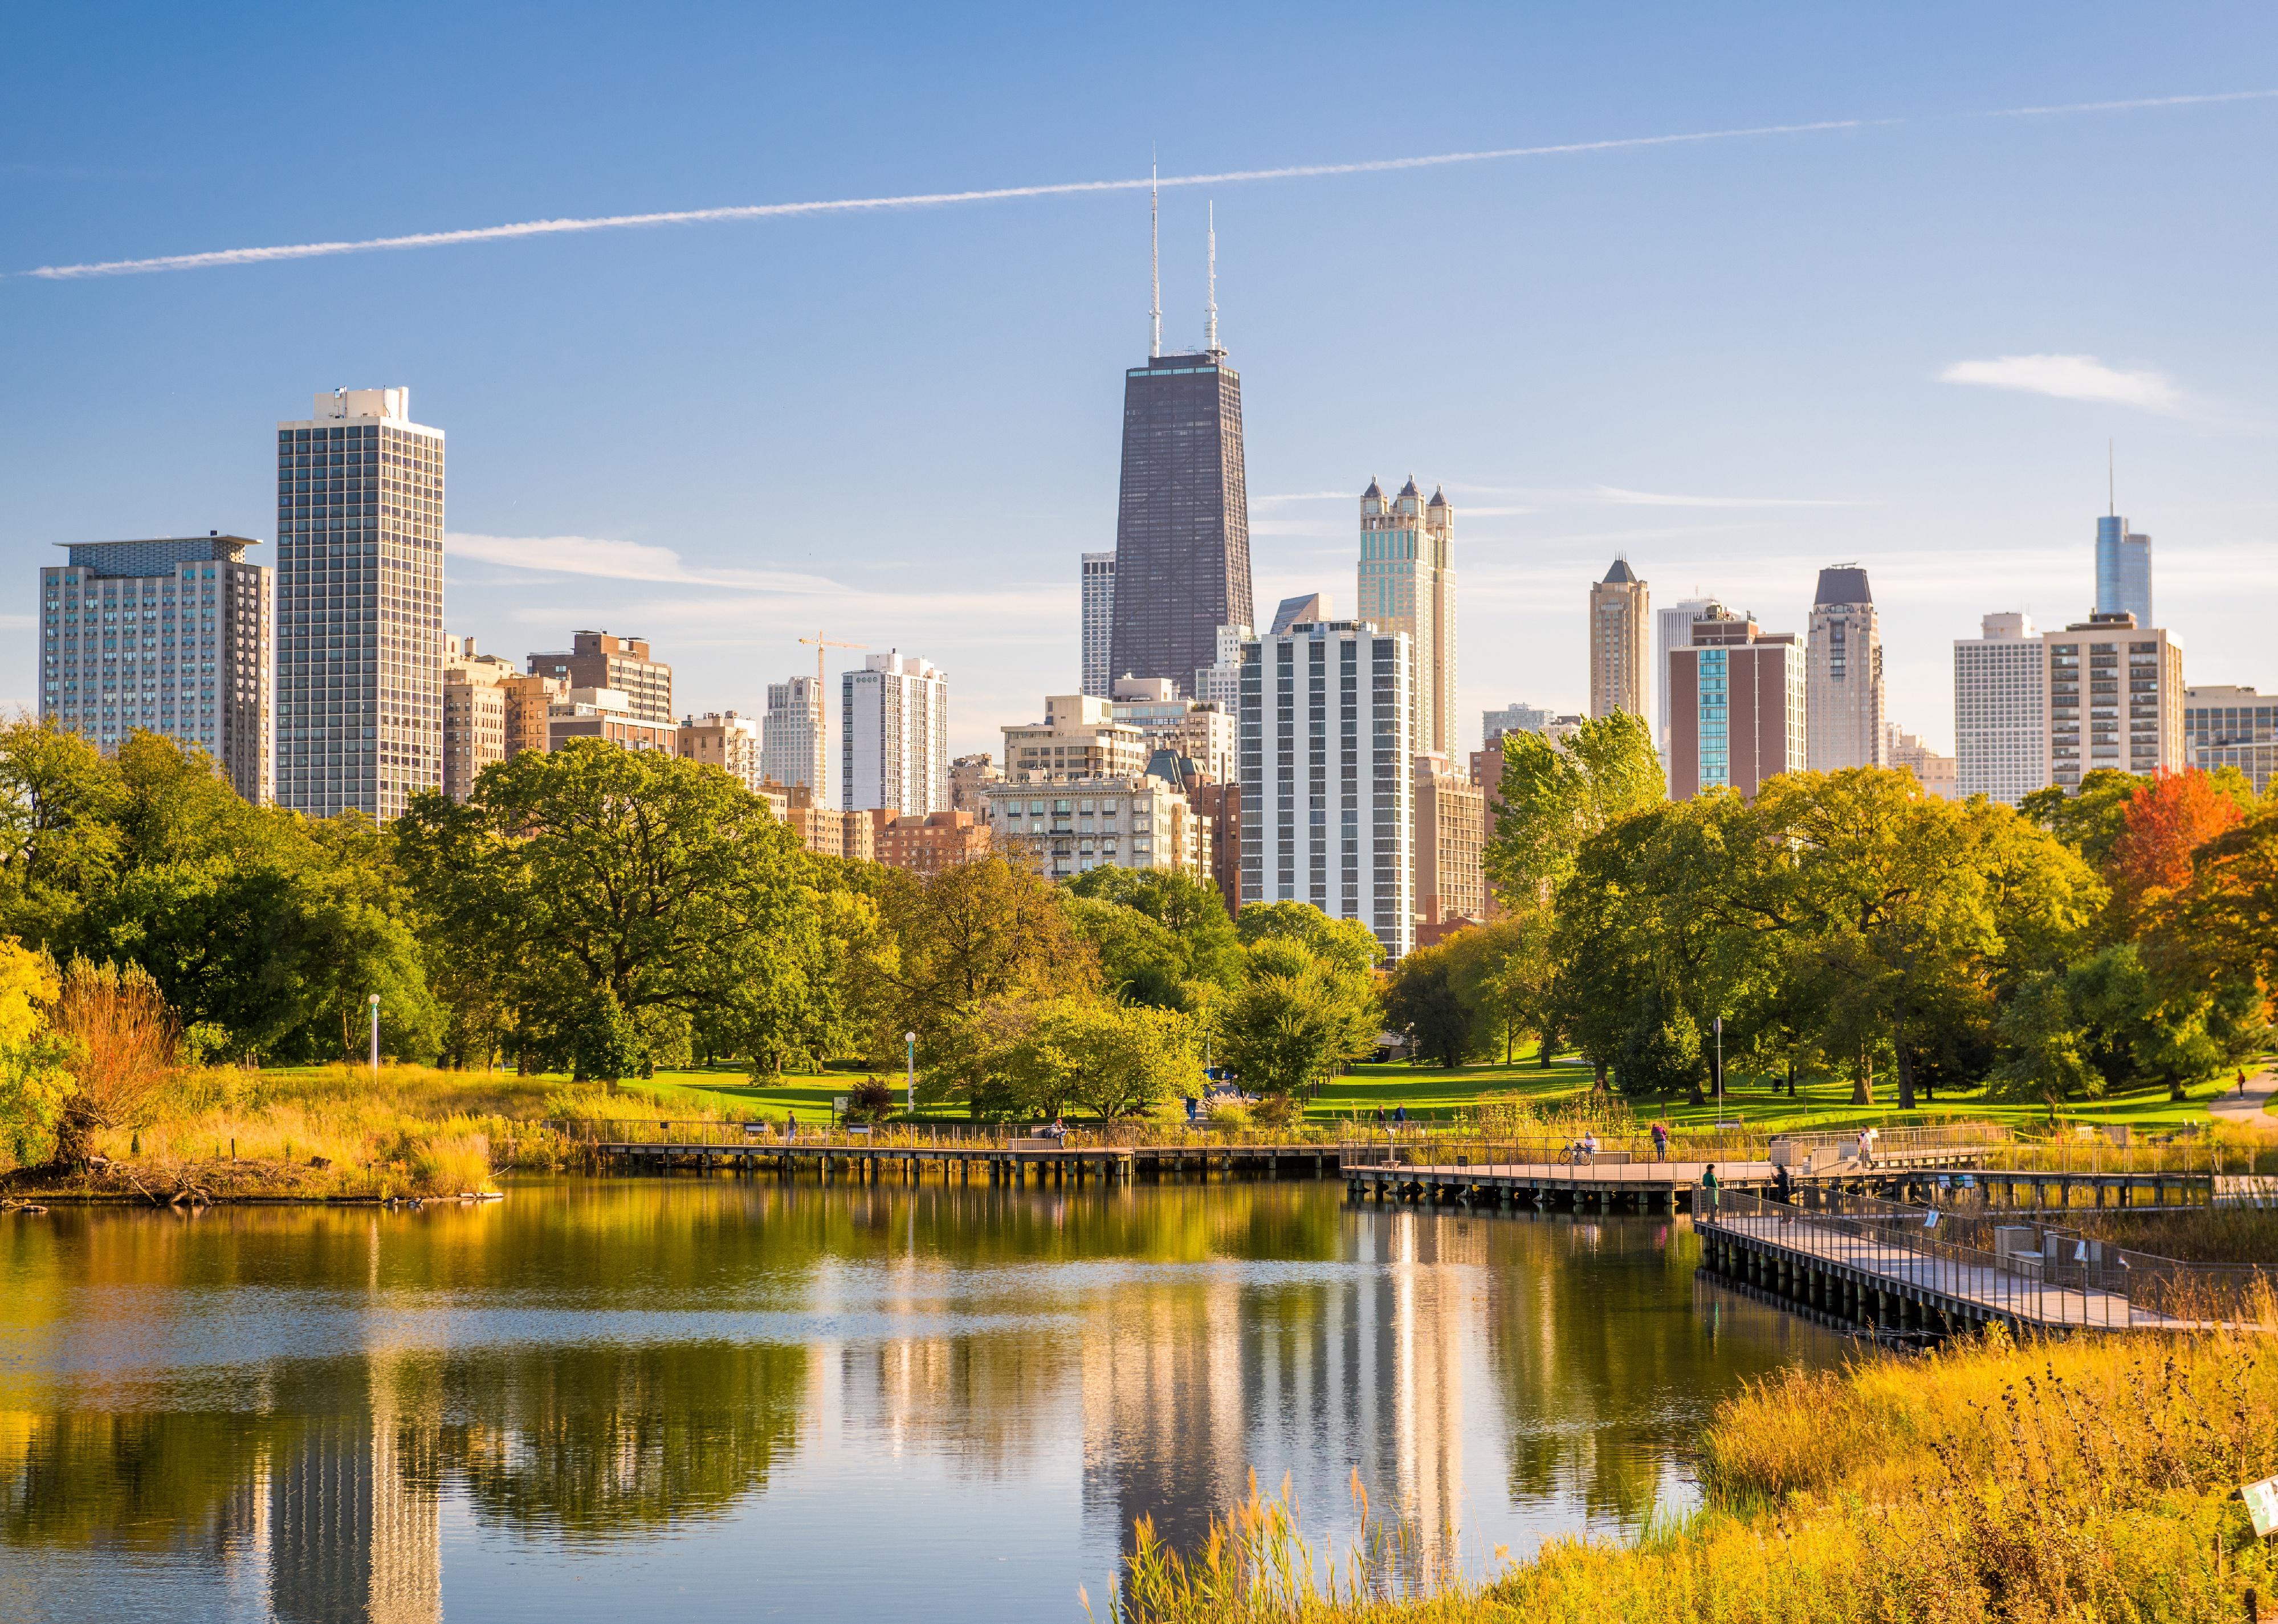 Chicago park and skyline.